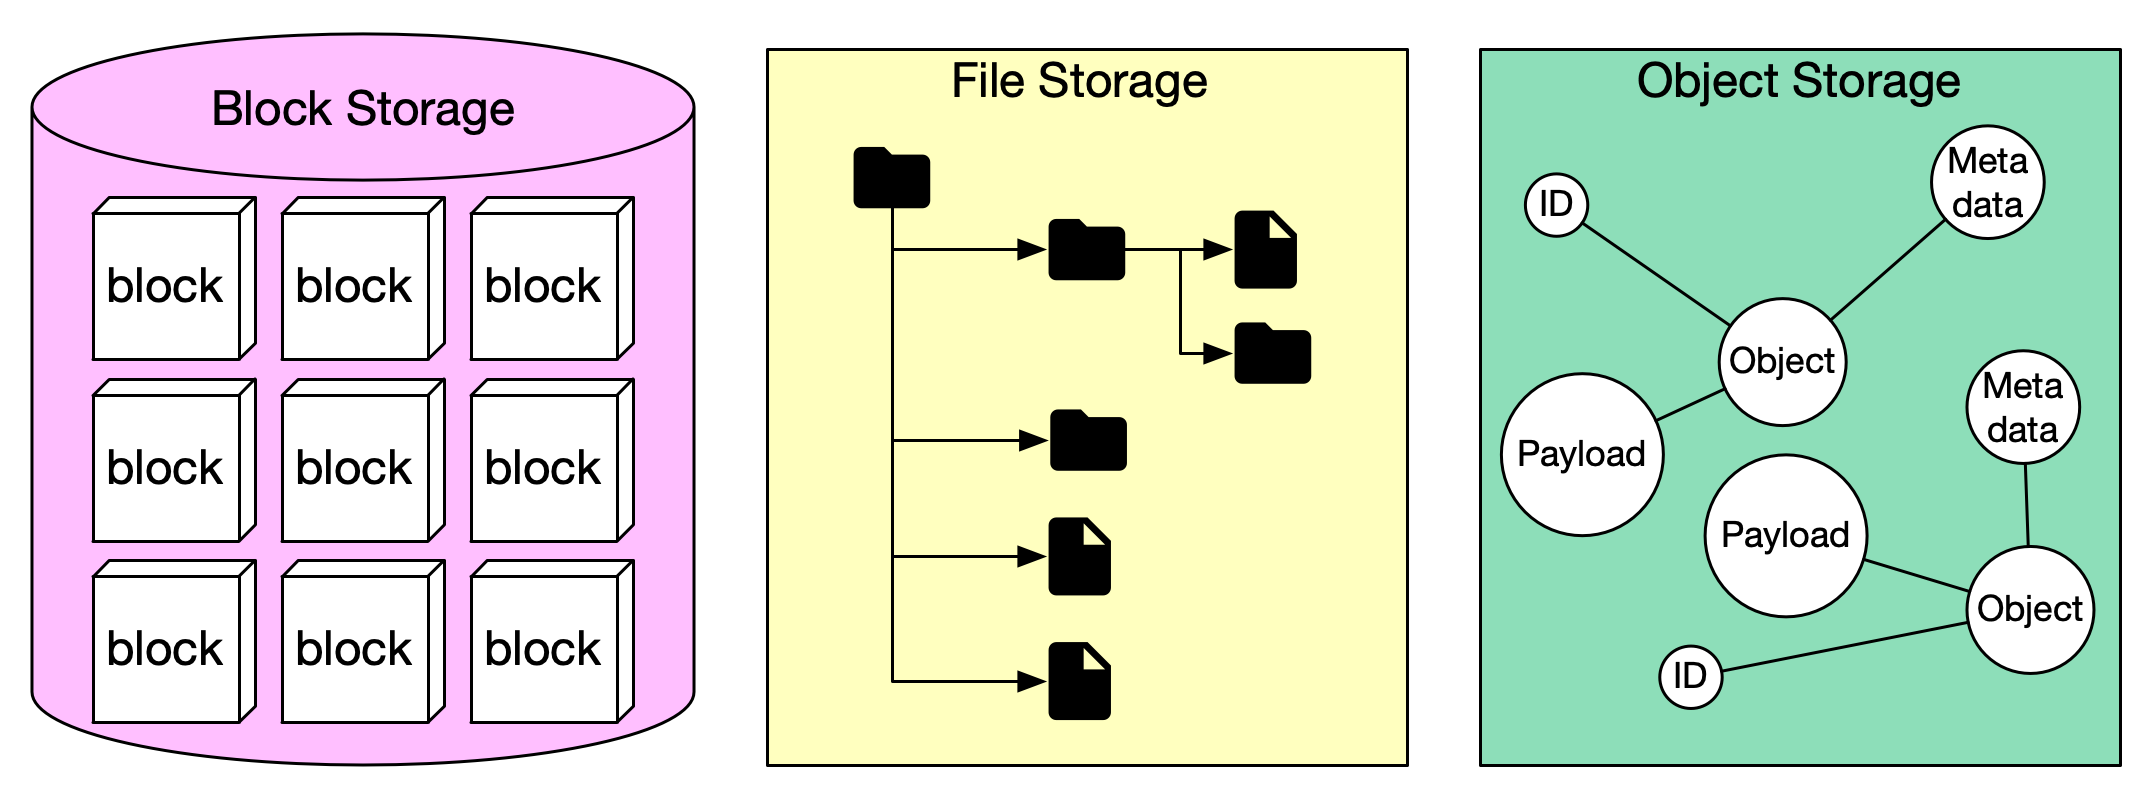 block vs file storage